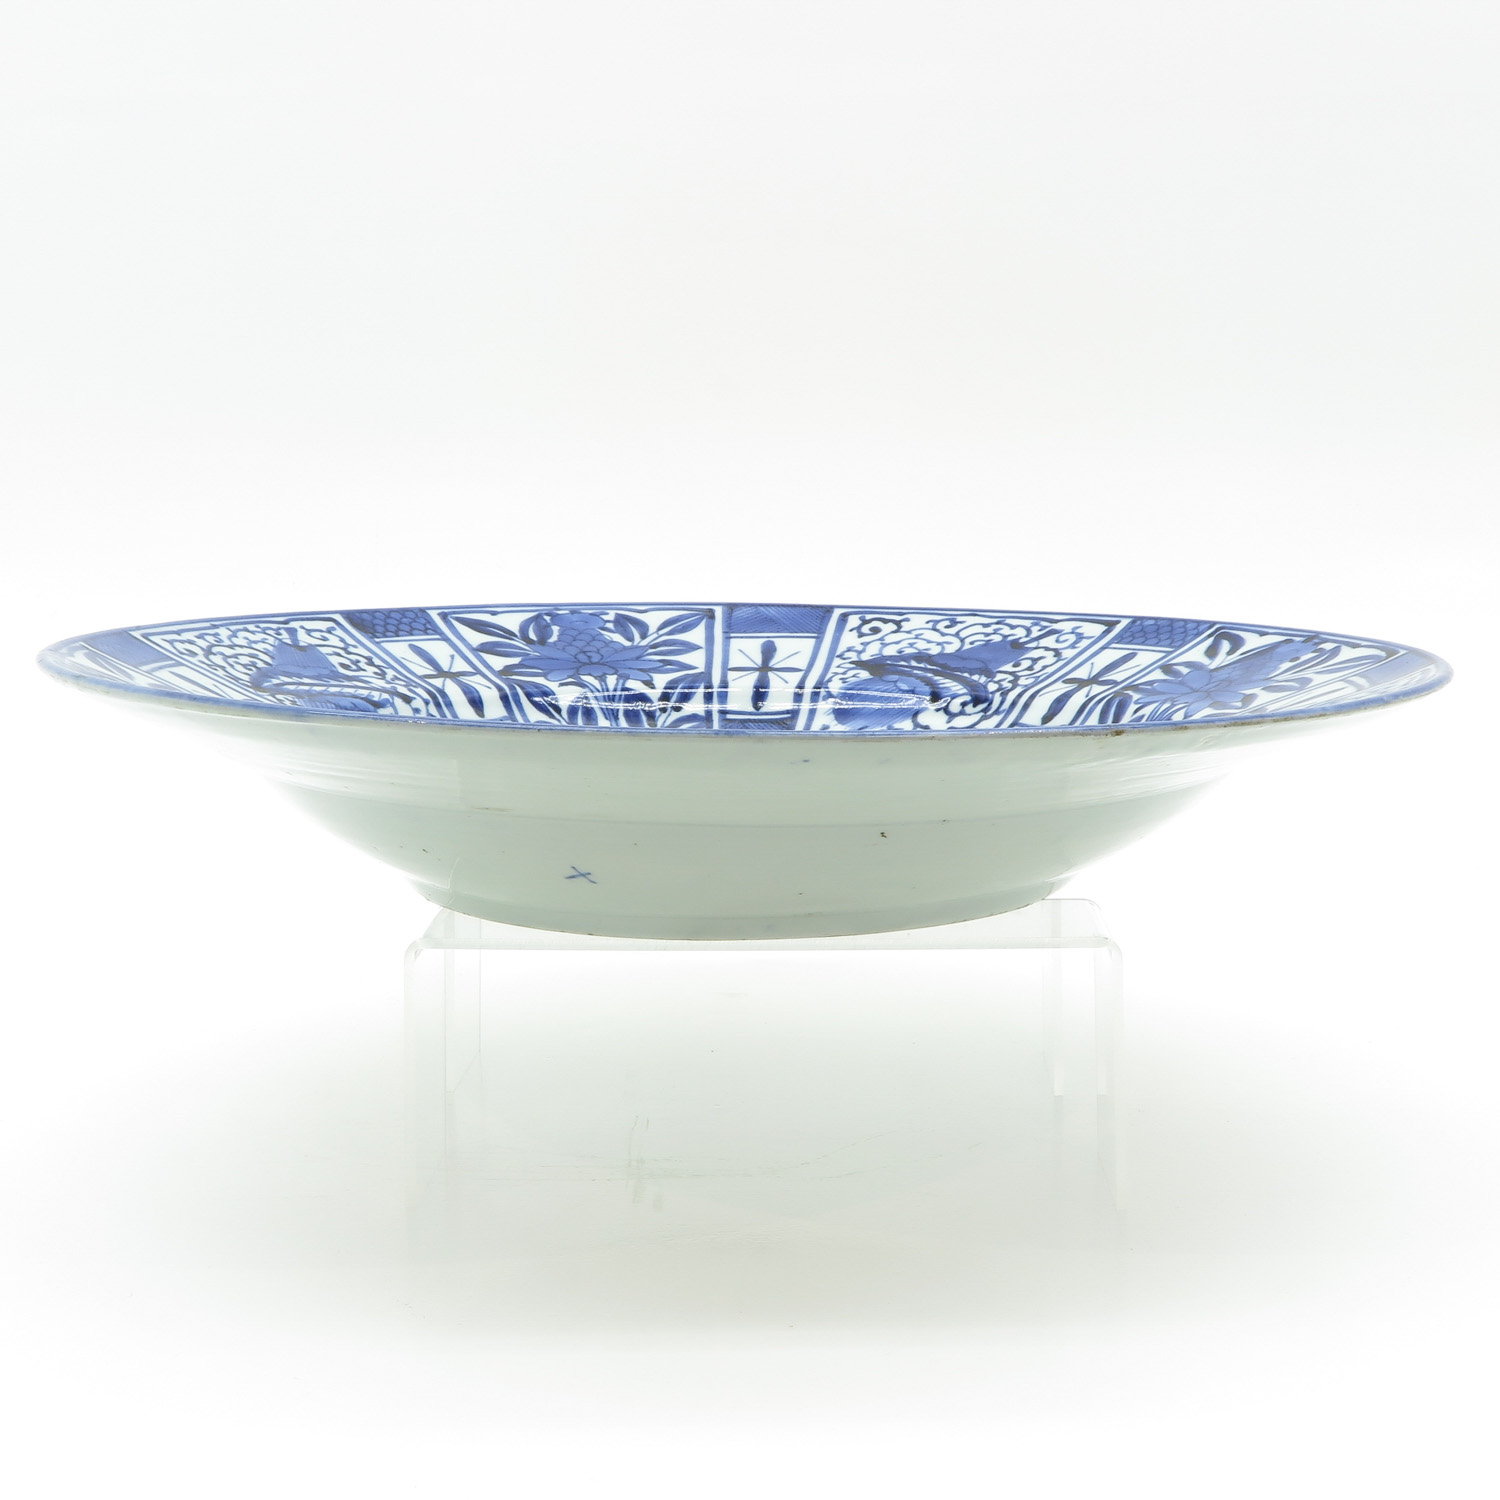 Japanese Porcelain Plate Circa 1700 - Image 3 of 3